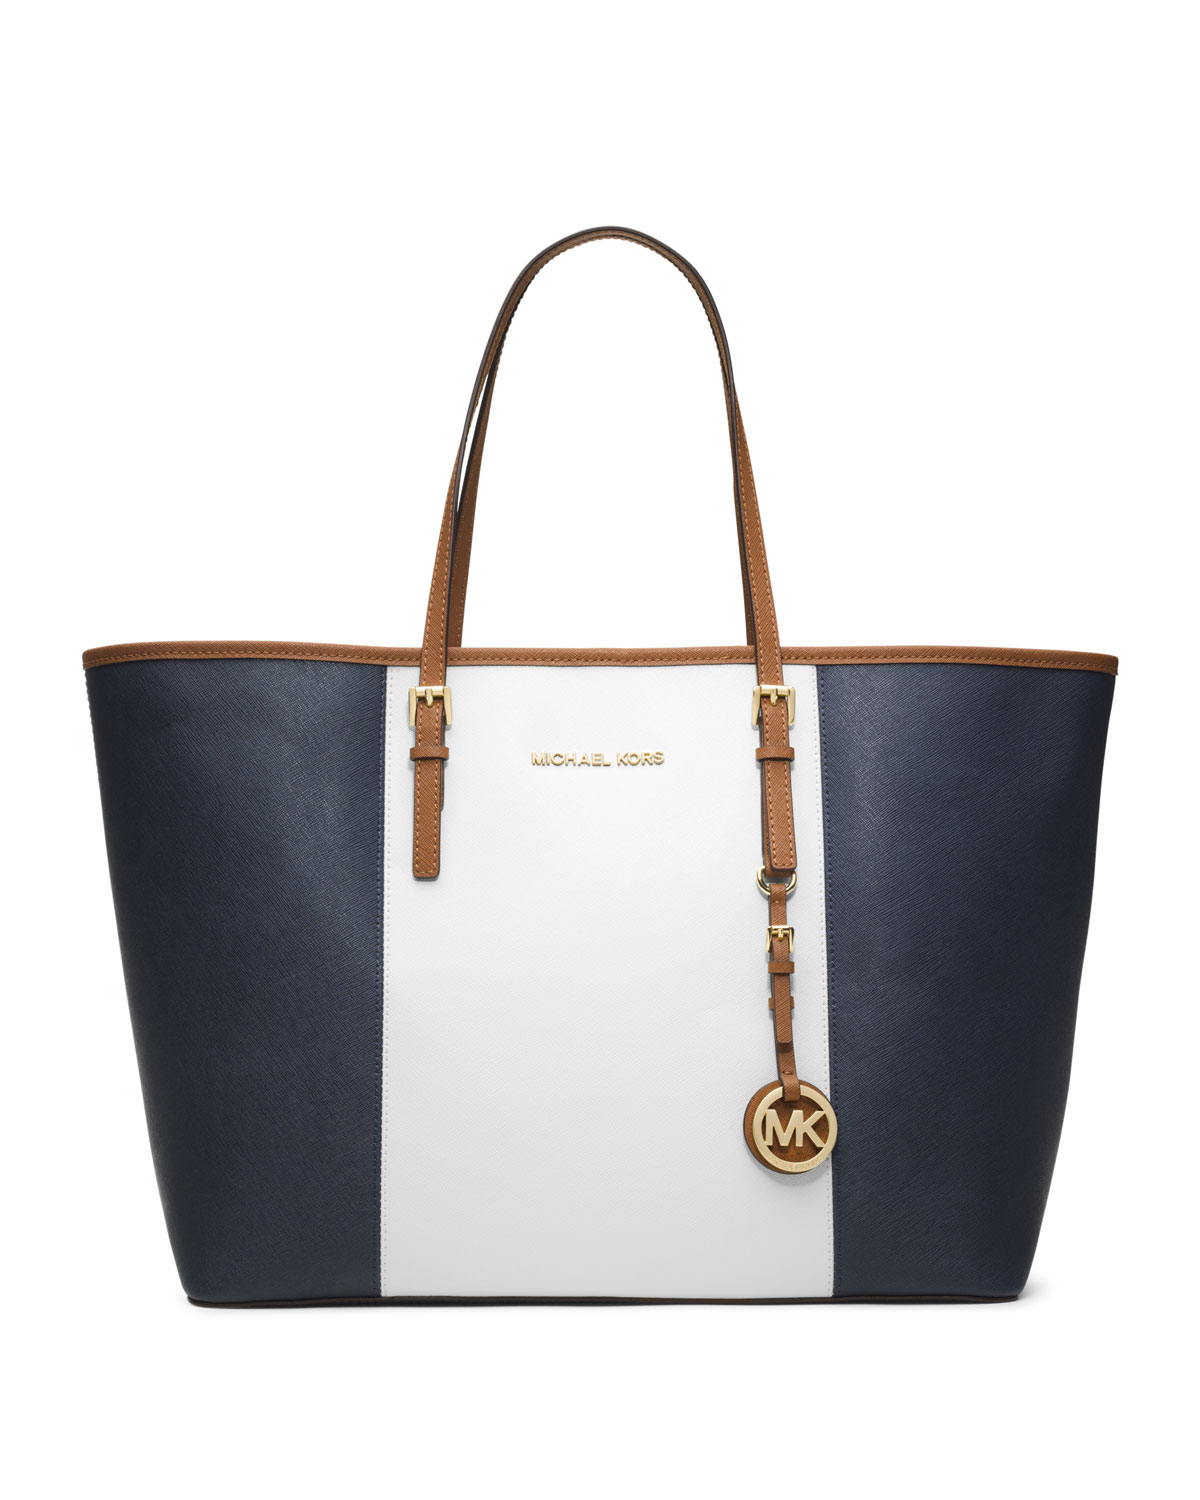 michael kors blue and white handbag